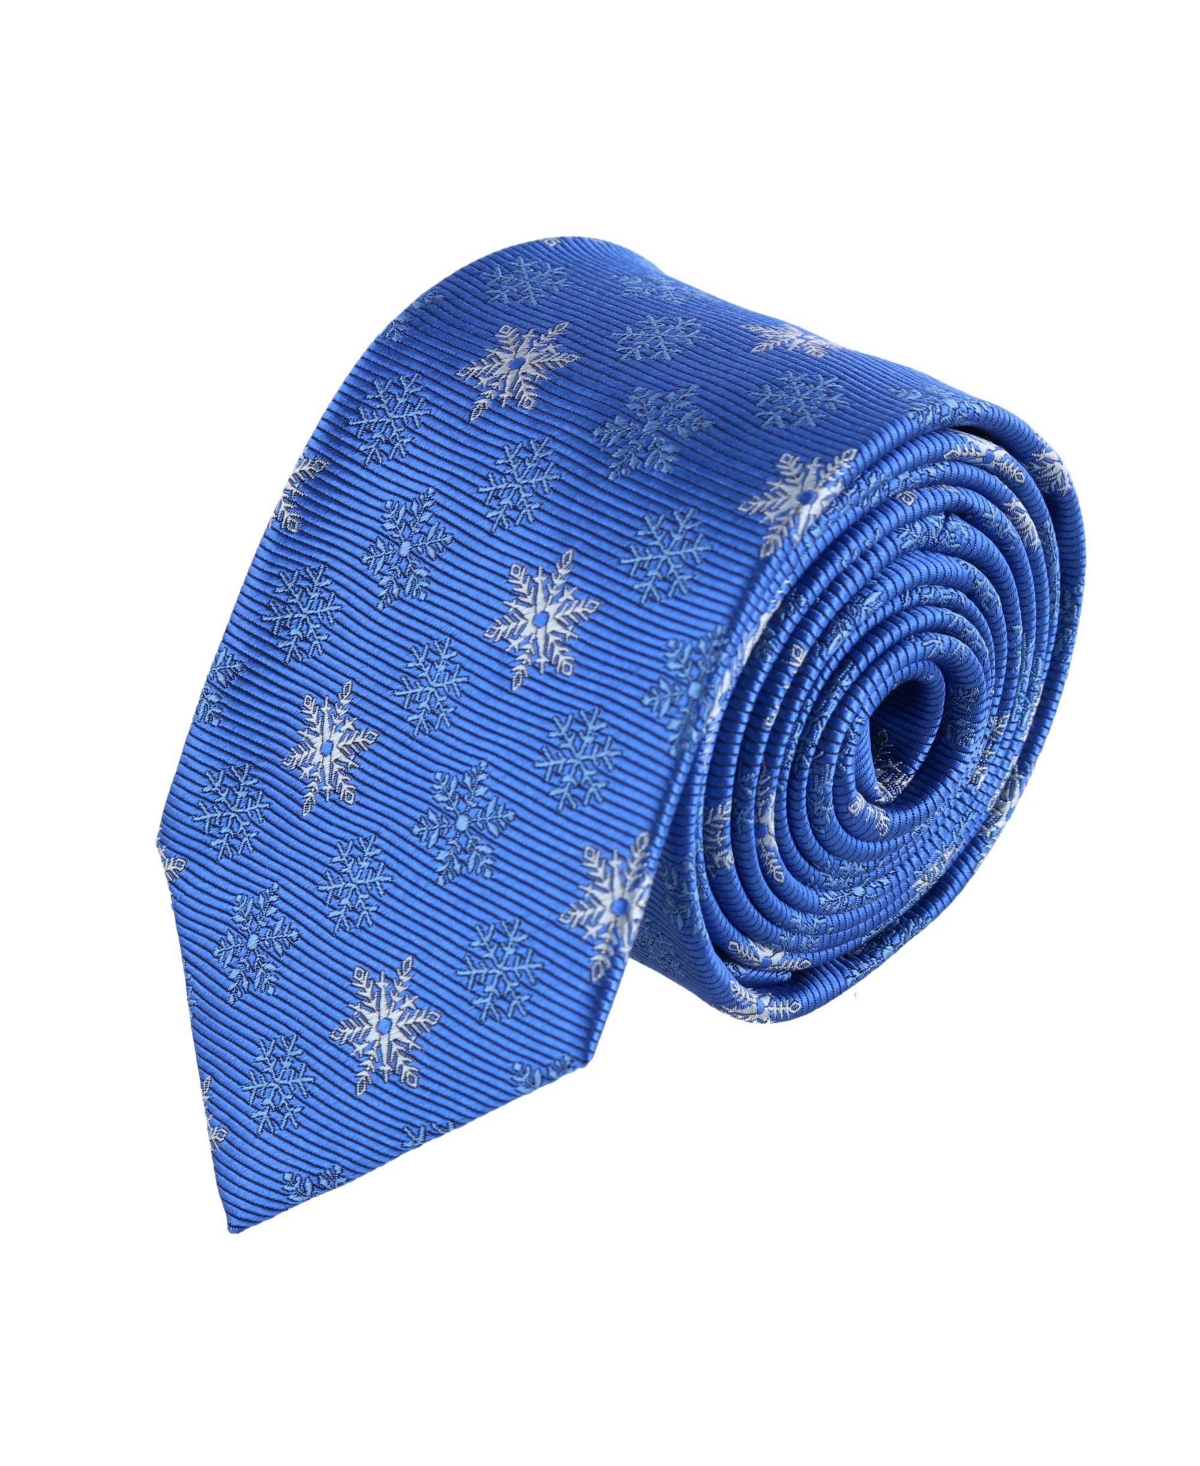 Let It Snow Novelty Snowflake Necktie - Light blue